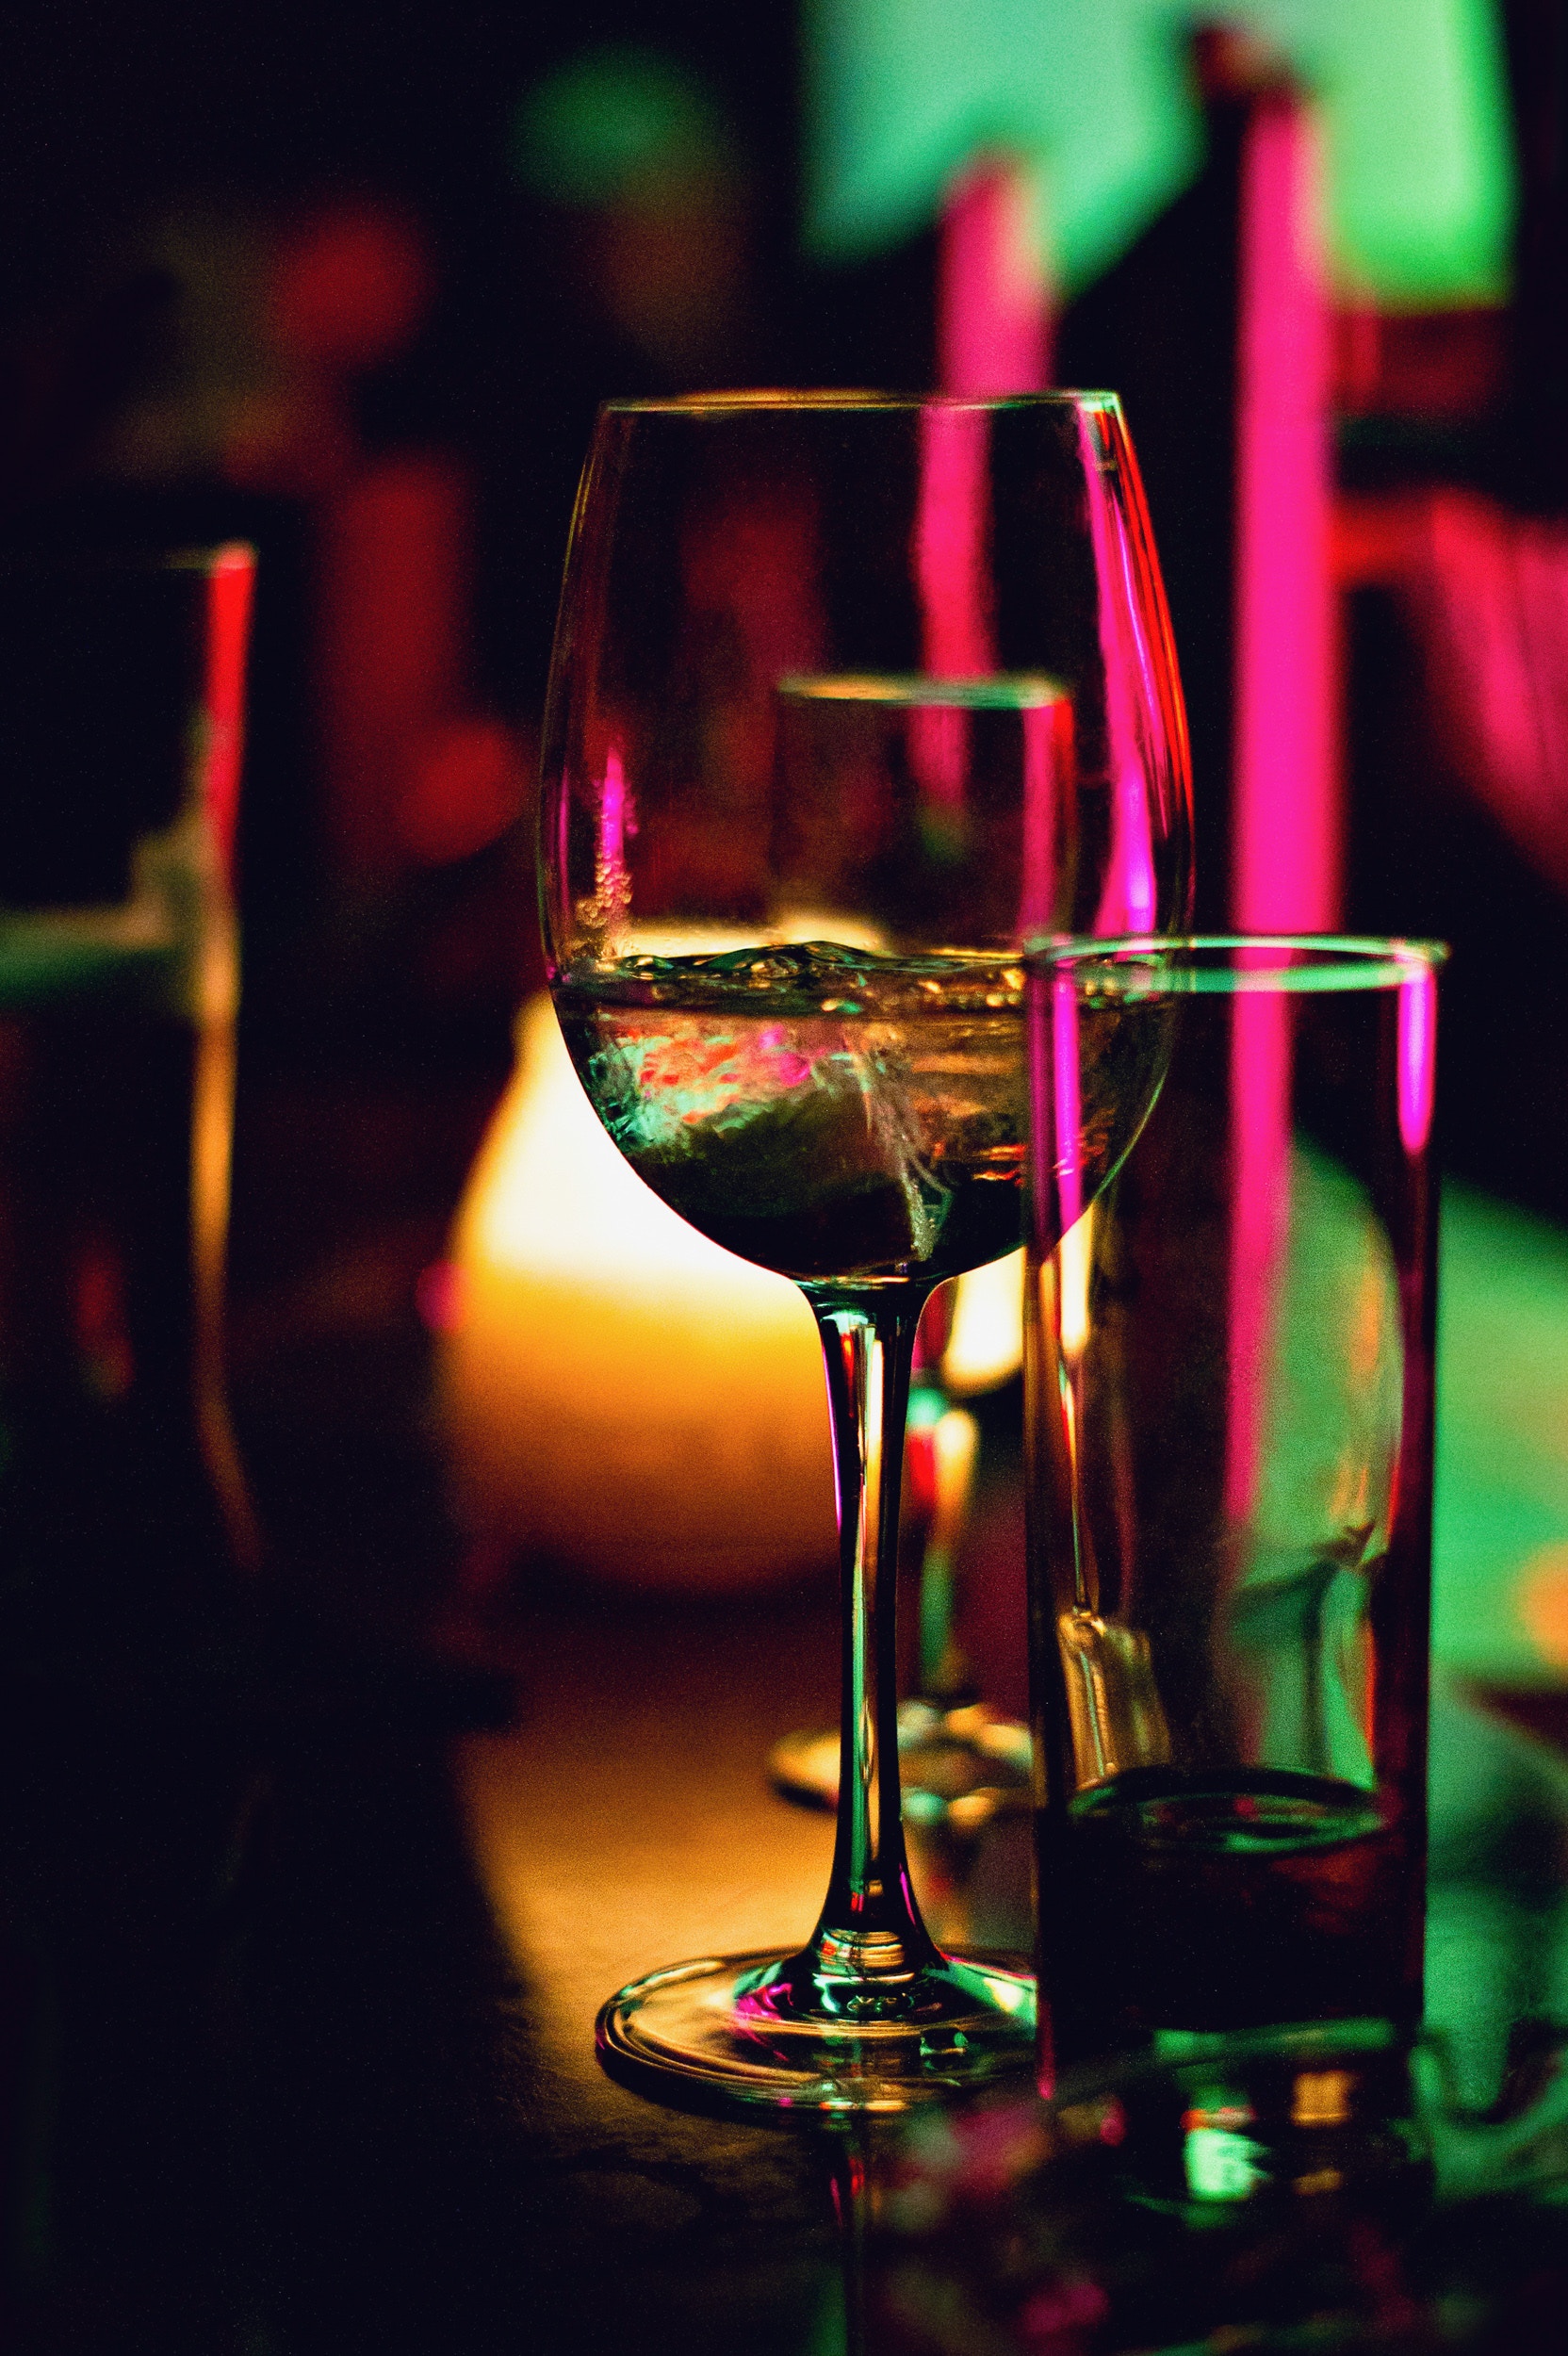 Close-up shot of wine glass on neon-lit bar